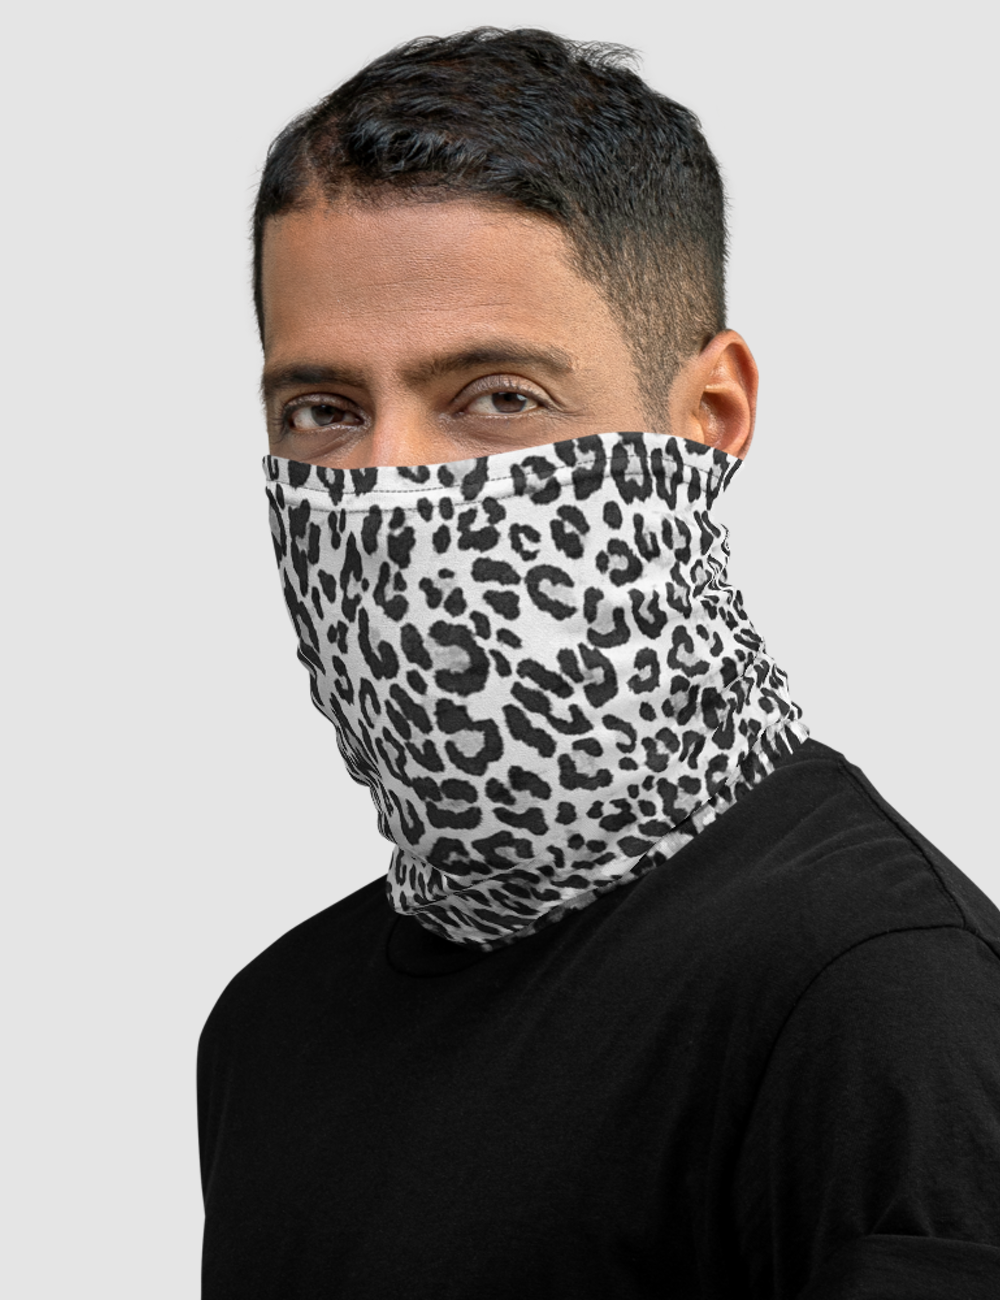 Faux Grey Leopard Fur Print Pattern | Neck Gaiter Face Mask OniTakai